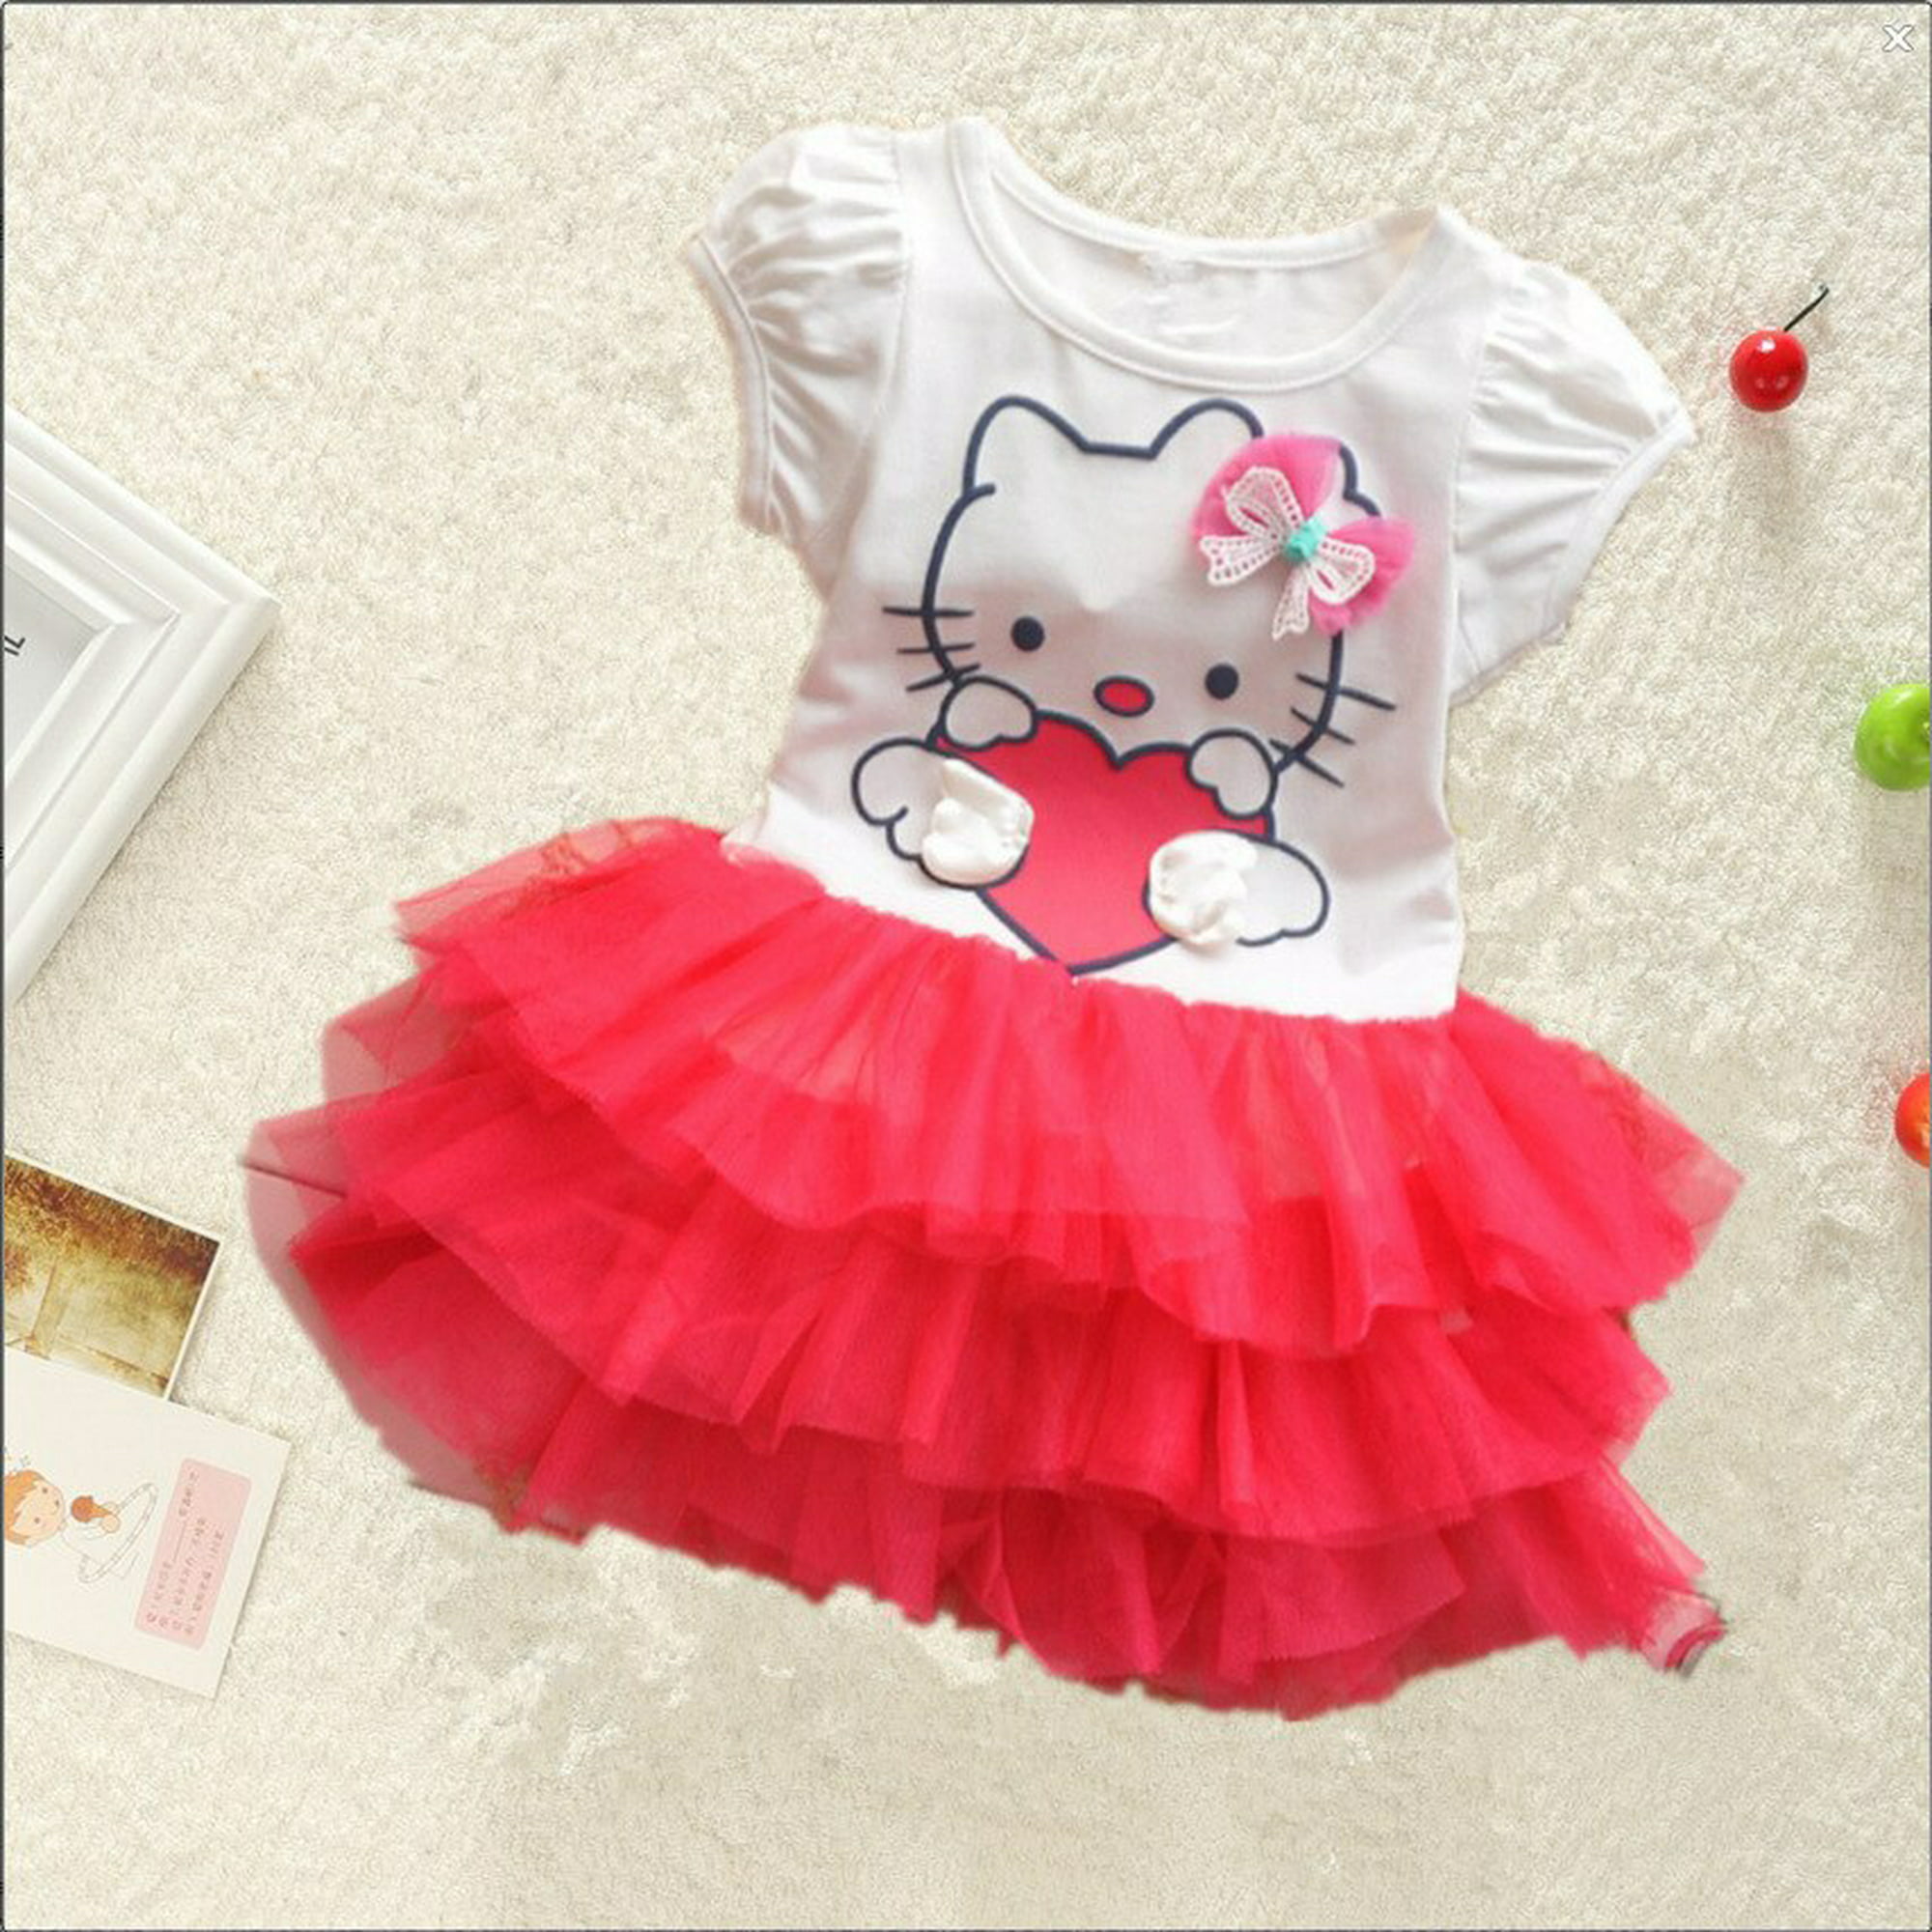 Disfraz Hello Kitty vestido tutu mujer